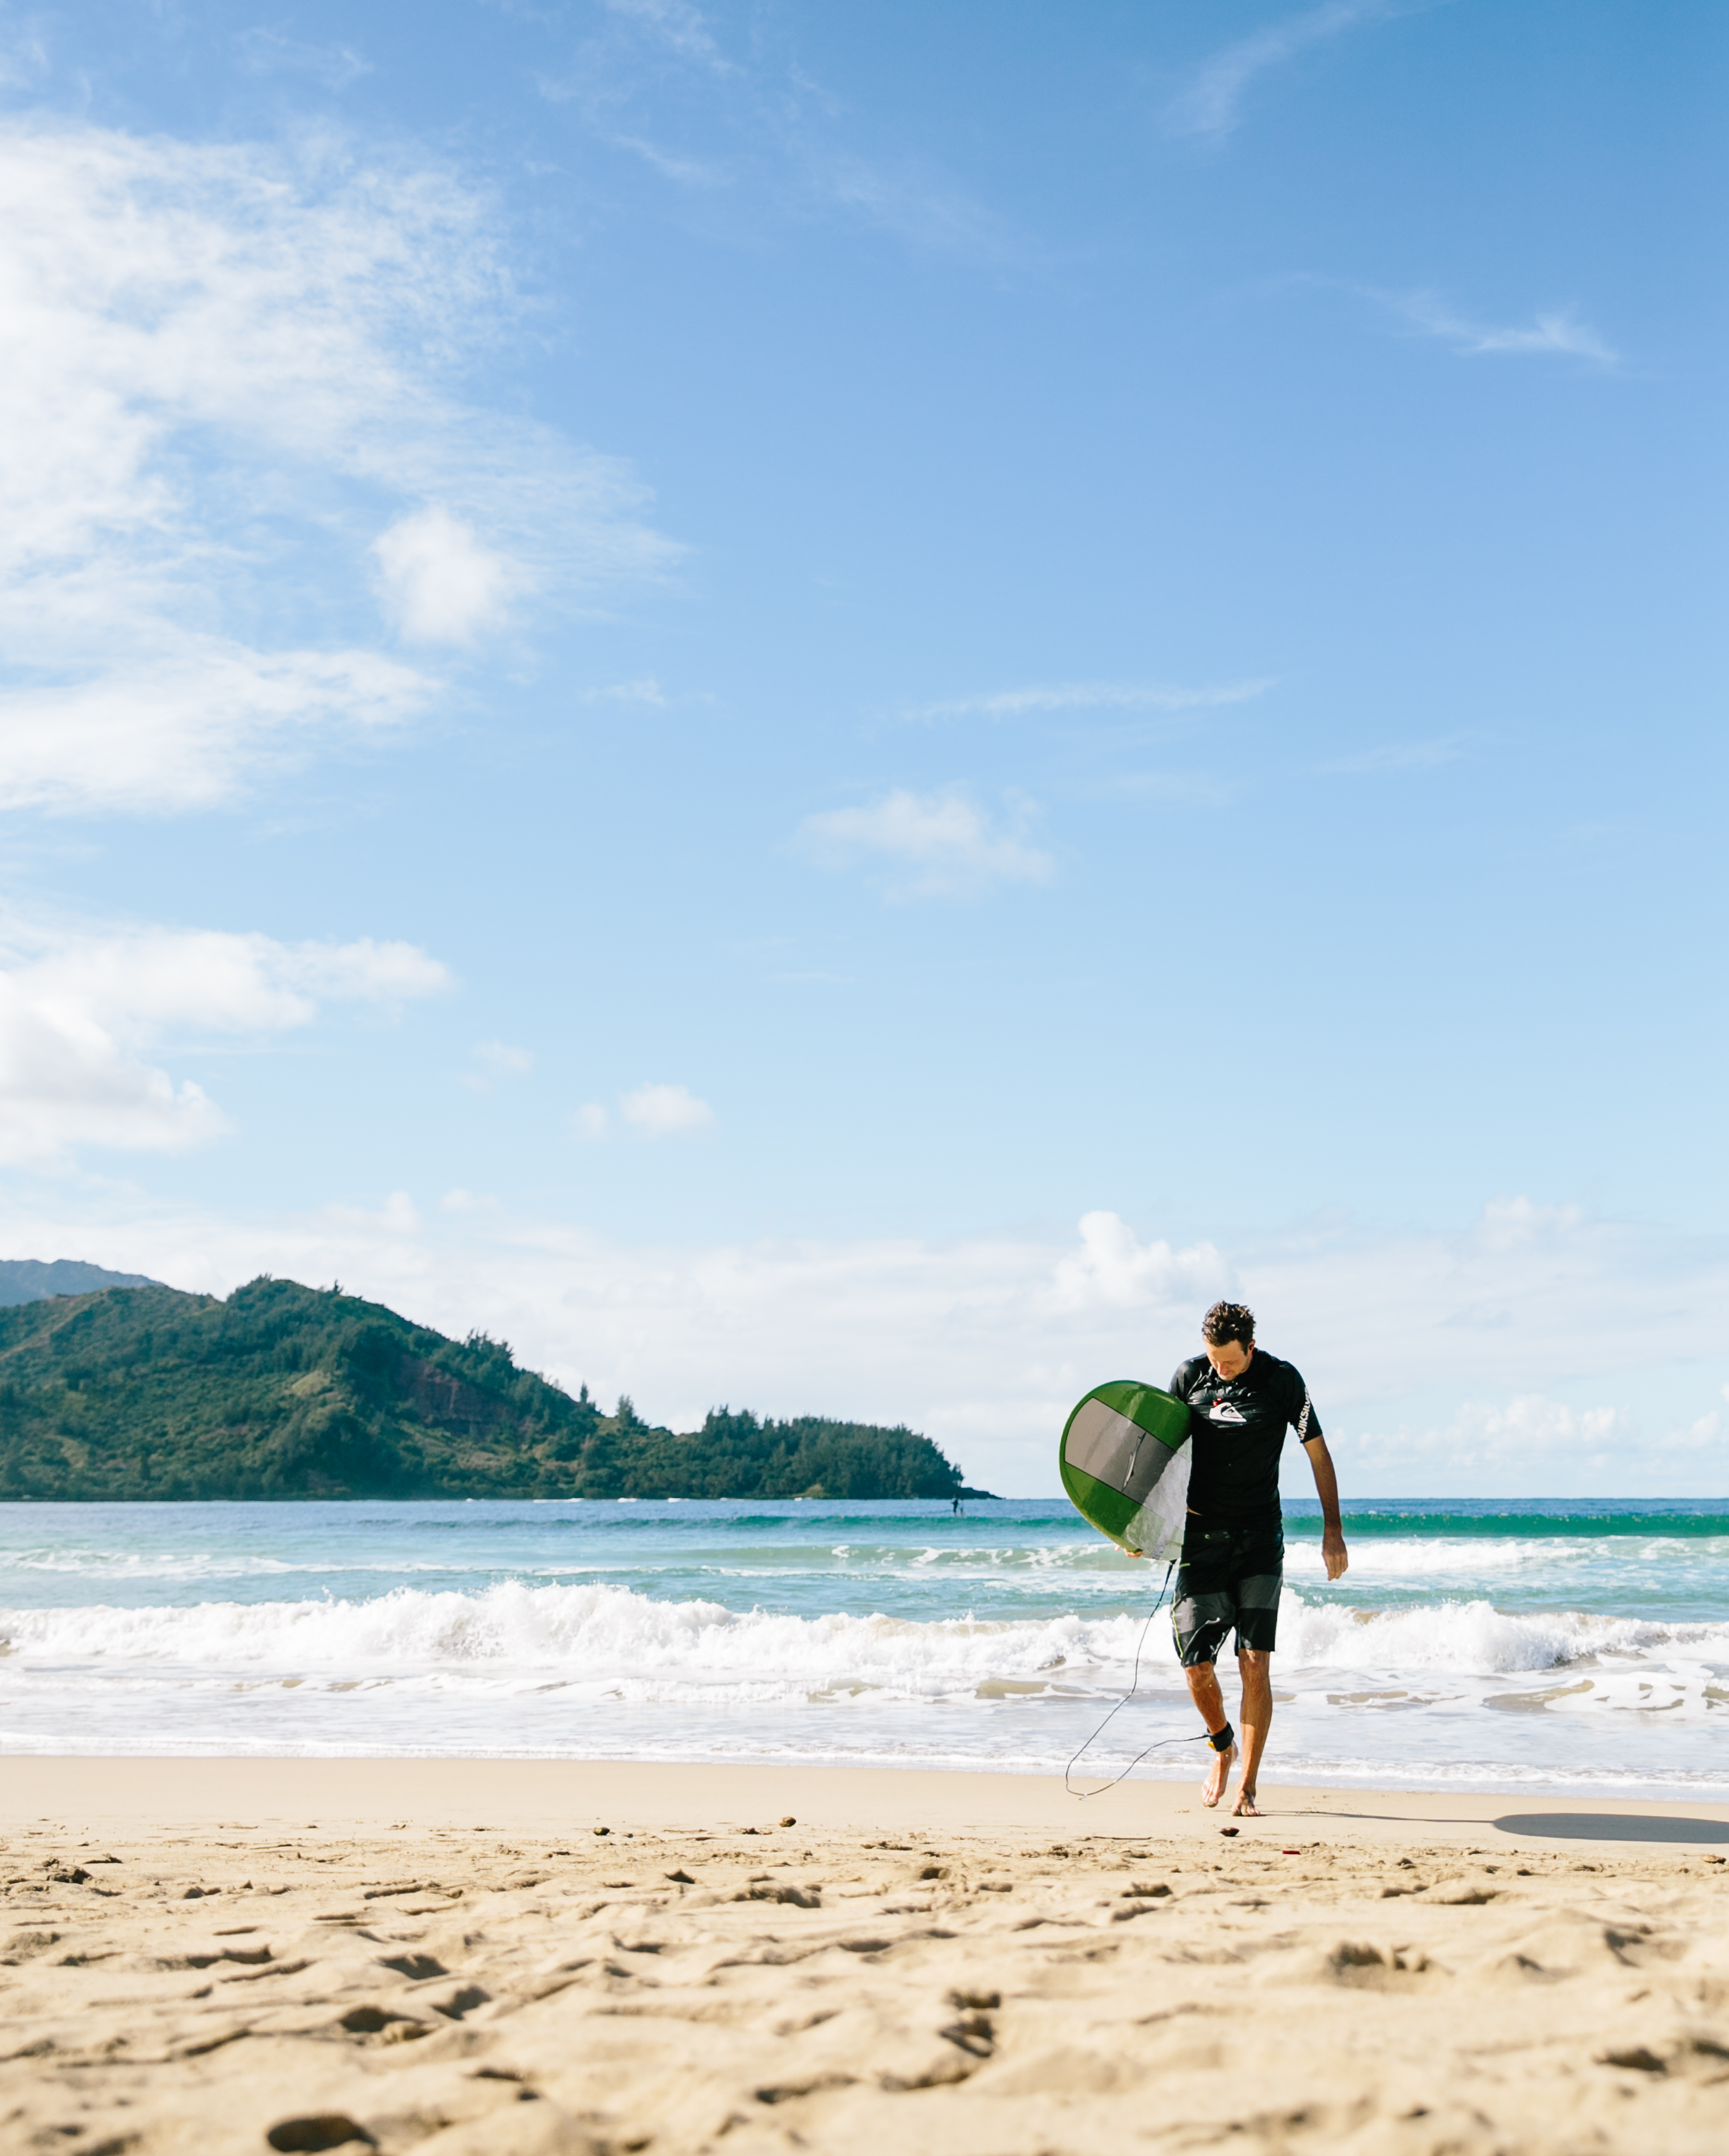 Surfing Hanalei Bay, Kauai | Travel Guide to Kauai, Hawaii | Travel Tips for Kauai | Packing List for Kauai | Helpful Tips for Traveling to Kauai | Kauai Travel Guide | Hawaii Travel Guide | Why You Should Visit Hawaii | Napali Coast Boat Excursion | Activities To Do in Kauai | Best Vacation Places in the World via @elanaloo + elanaloo.com